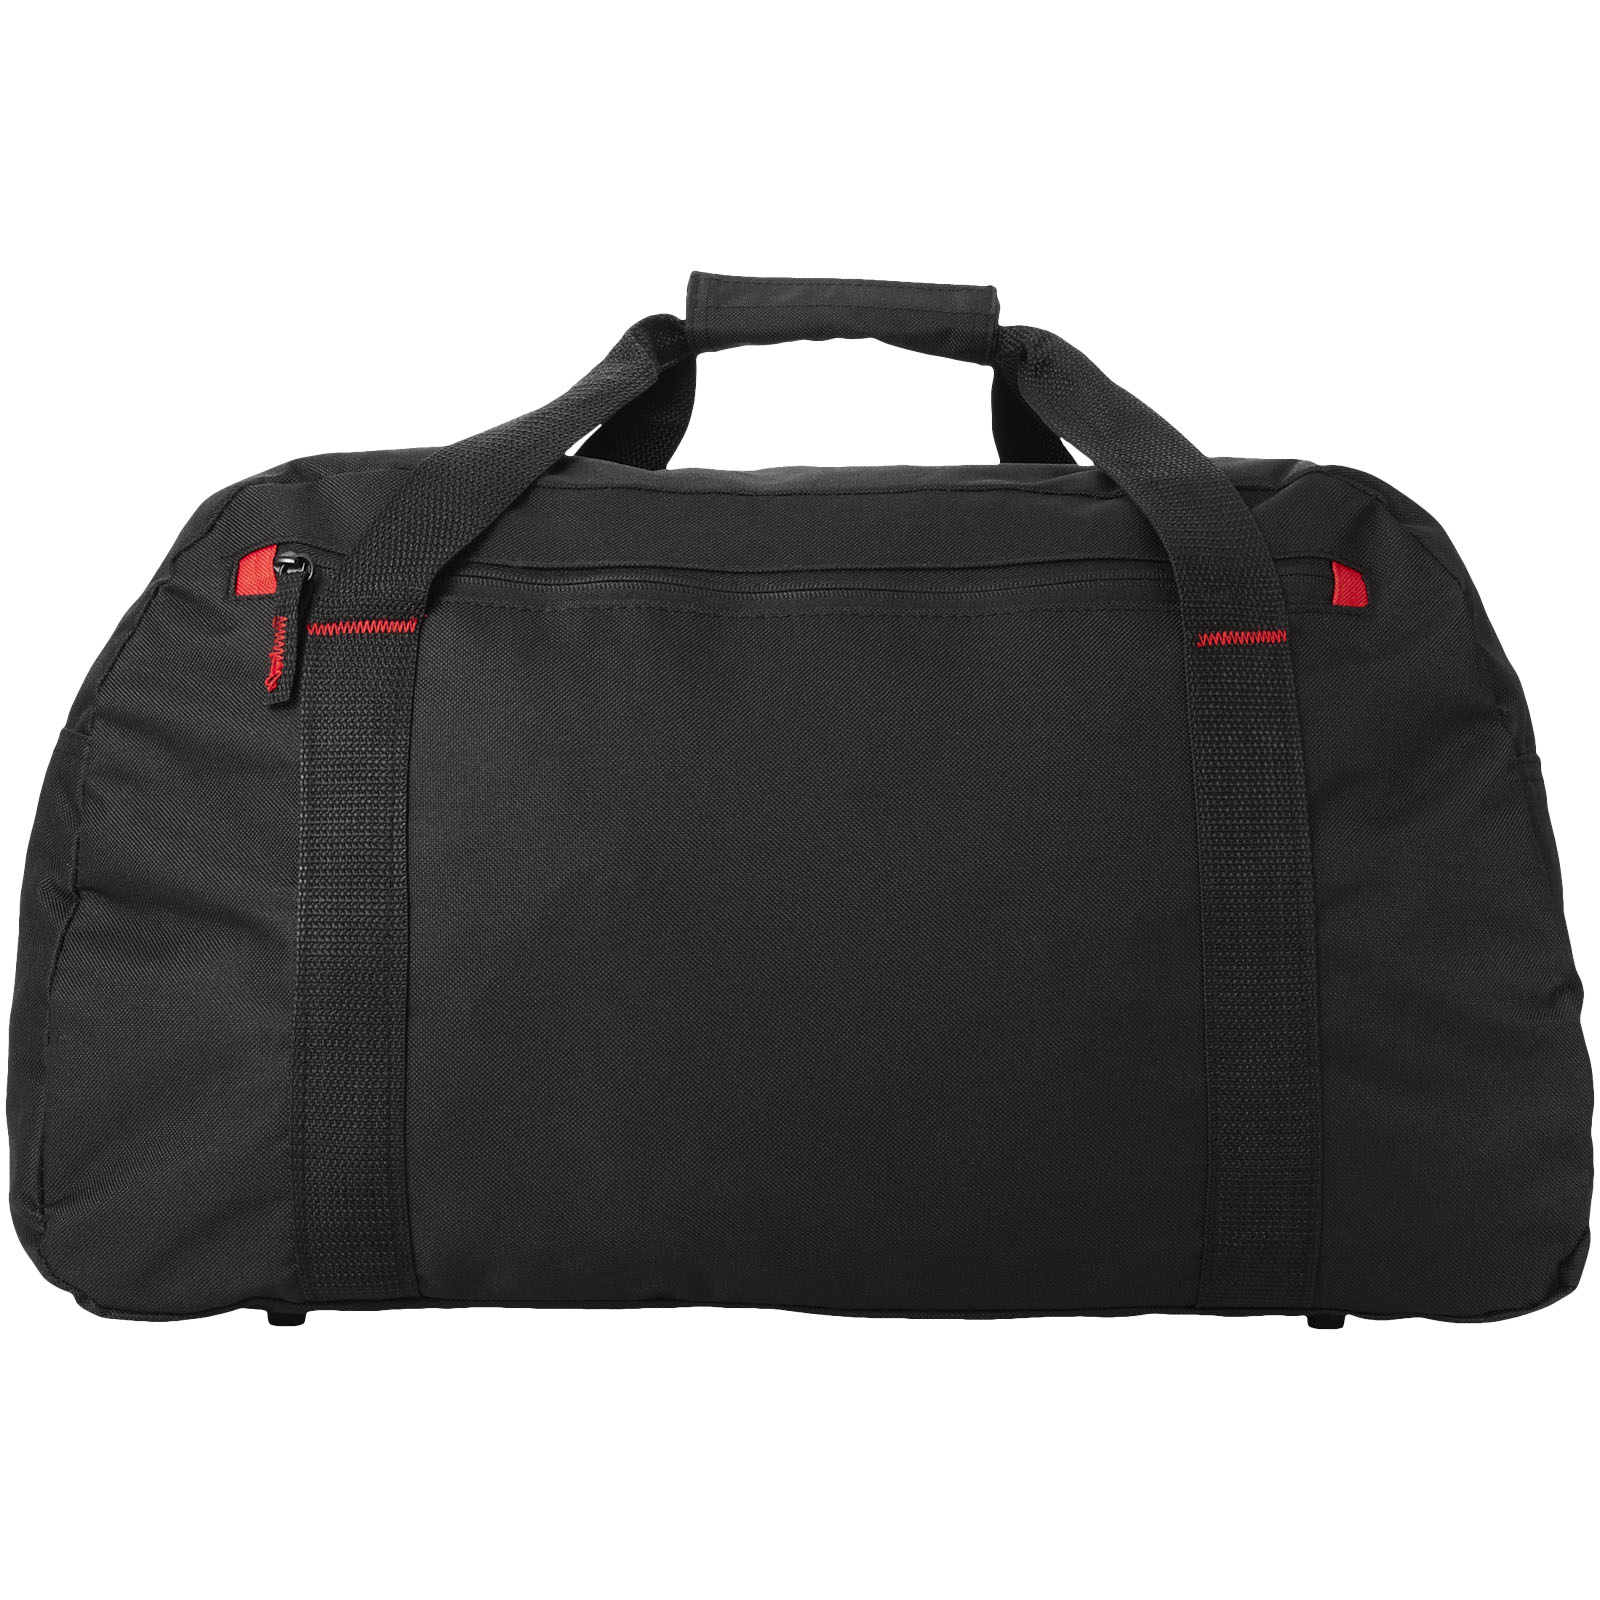 Advertising Travel bags - Vancouver travel duffel bag 35L - 1